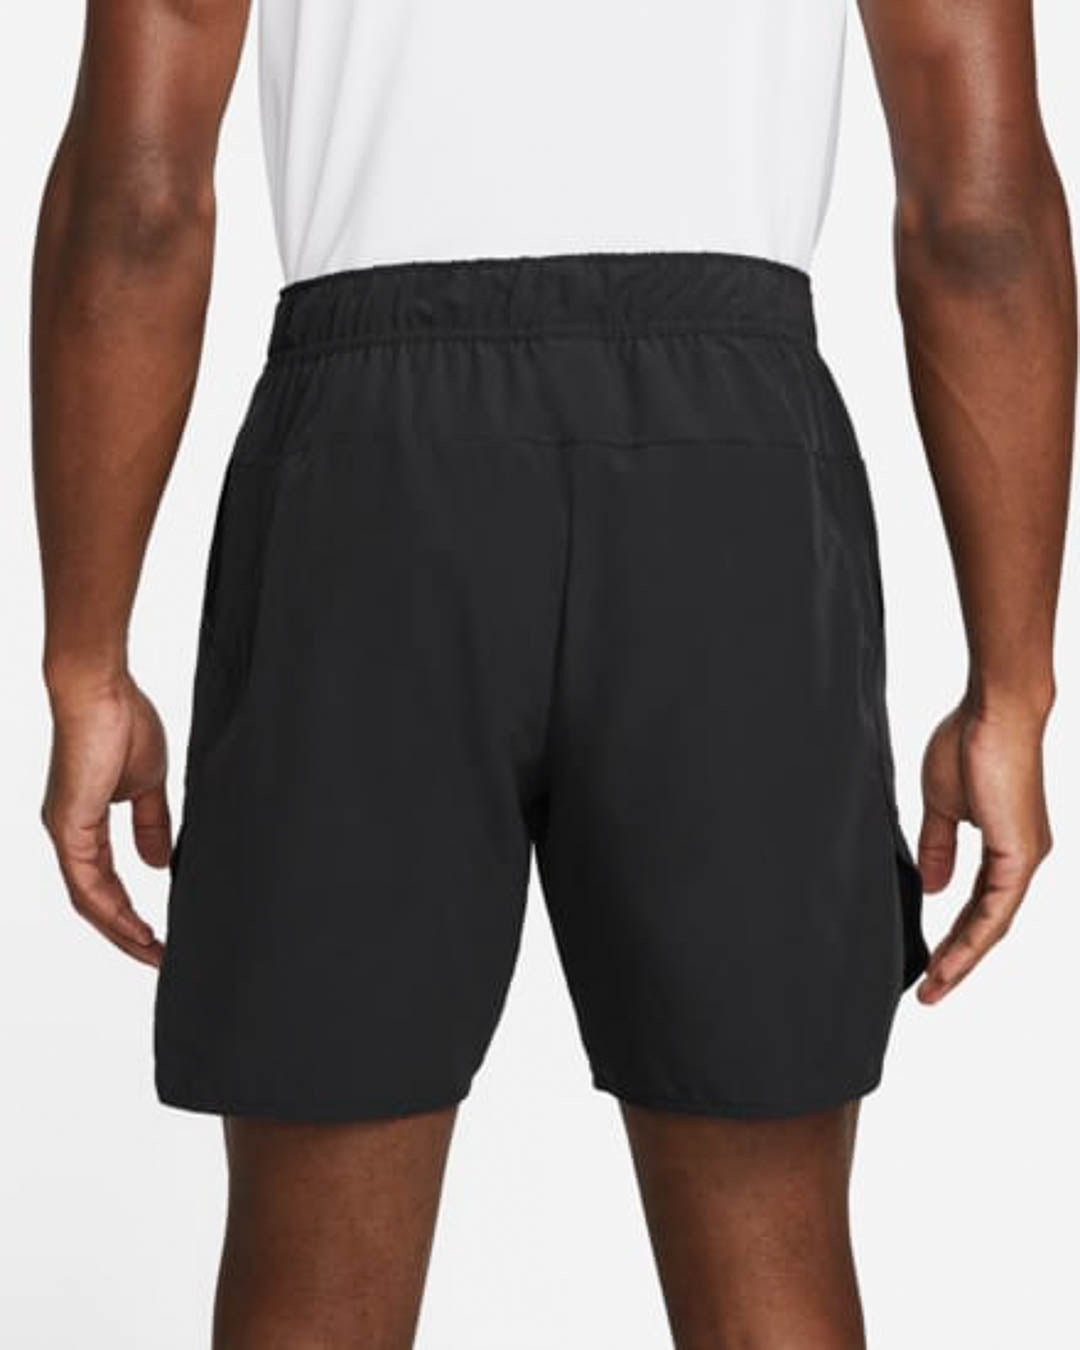 NikeCourt Dri-FIT Advantage 7” inch shorts